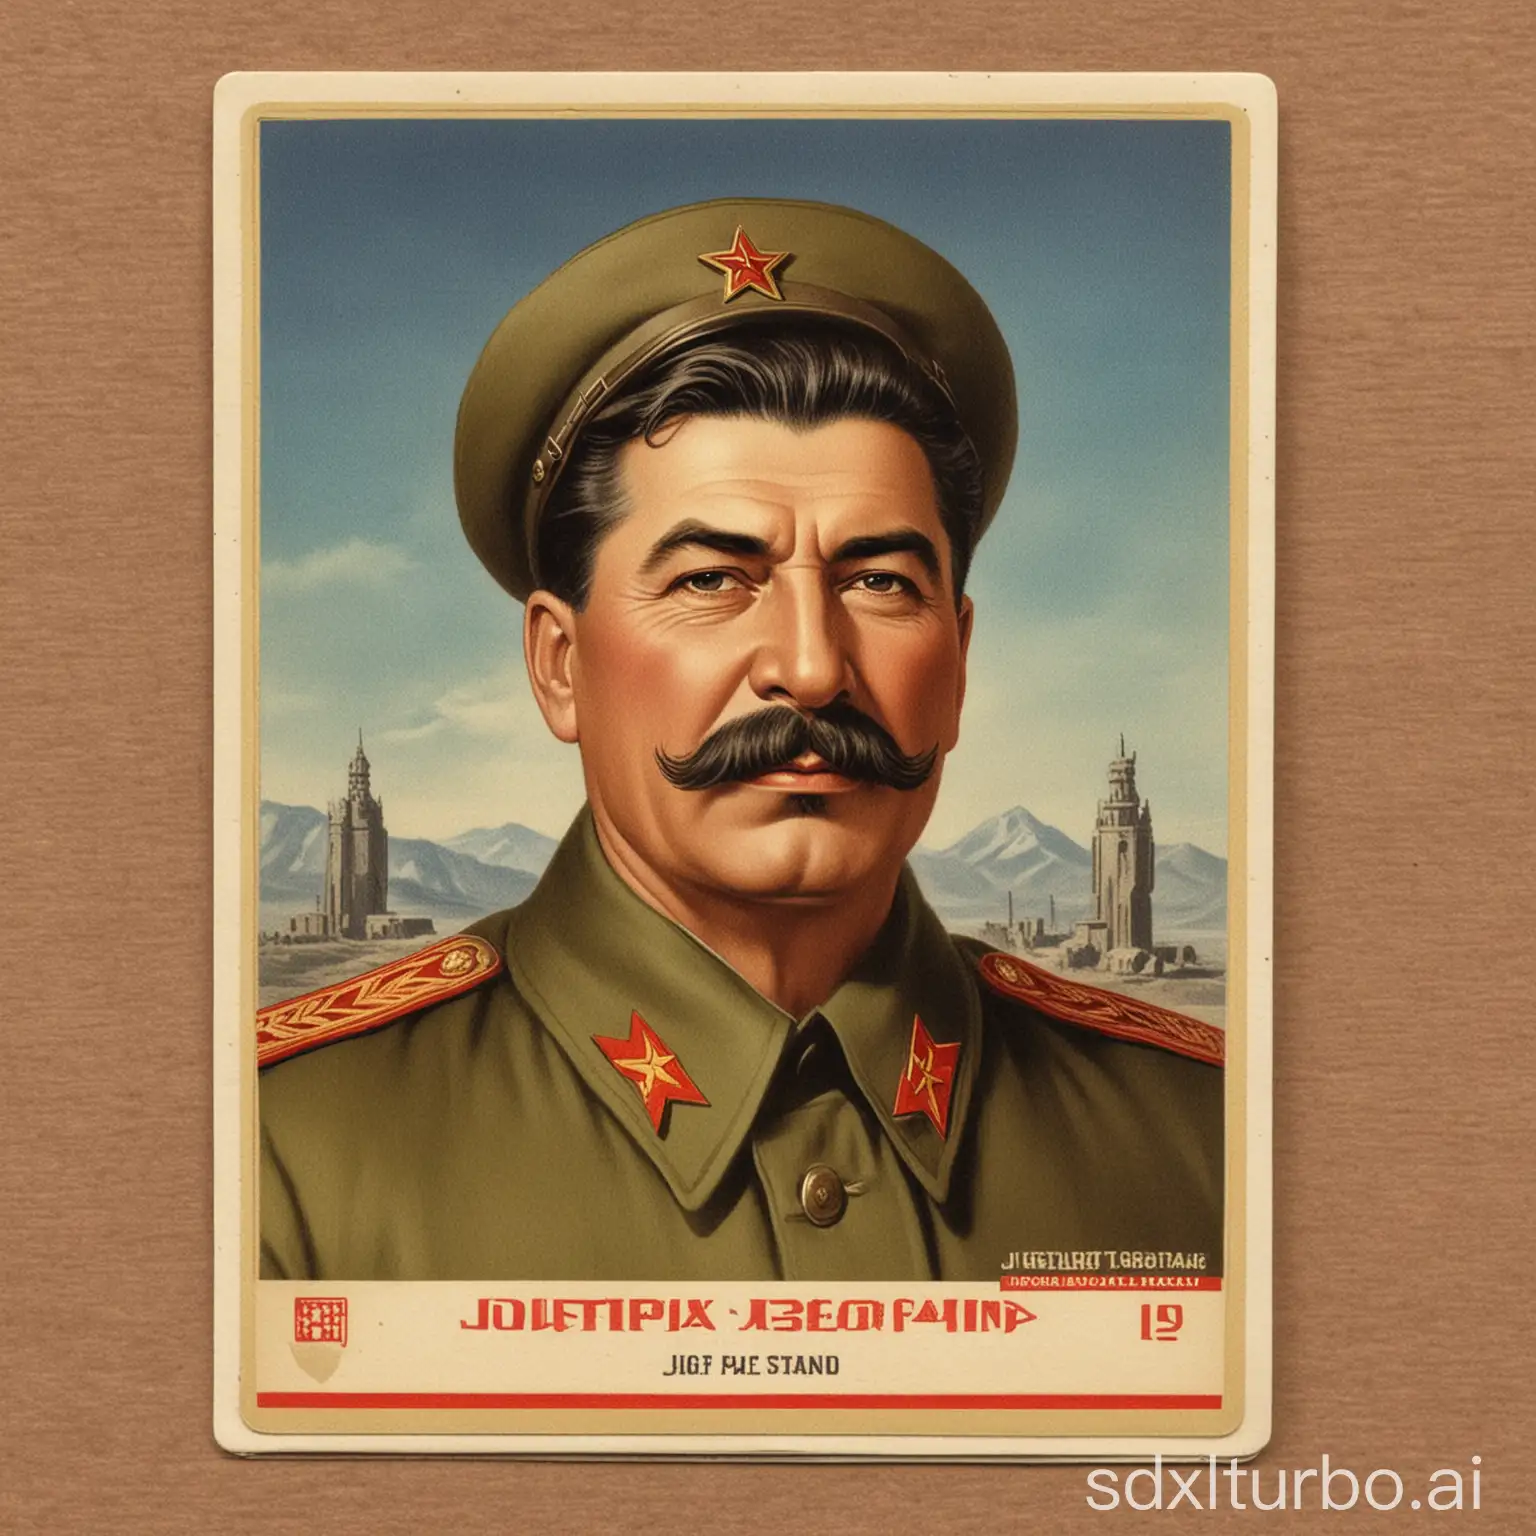 WWII trading card depicting Joseph Stalin